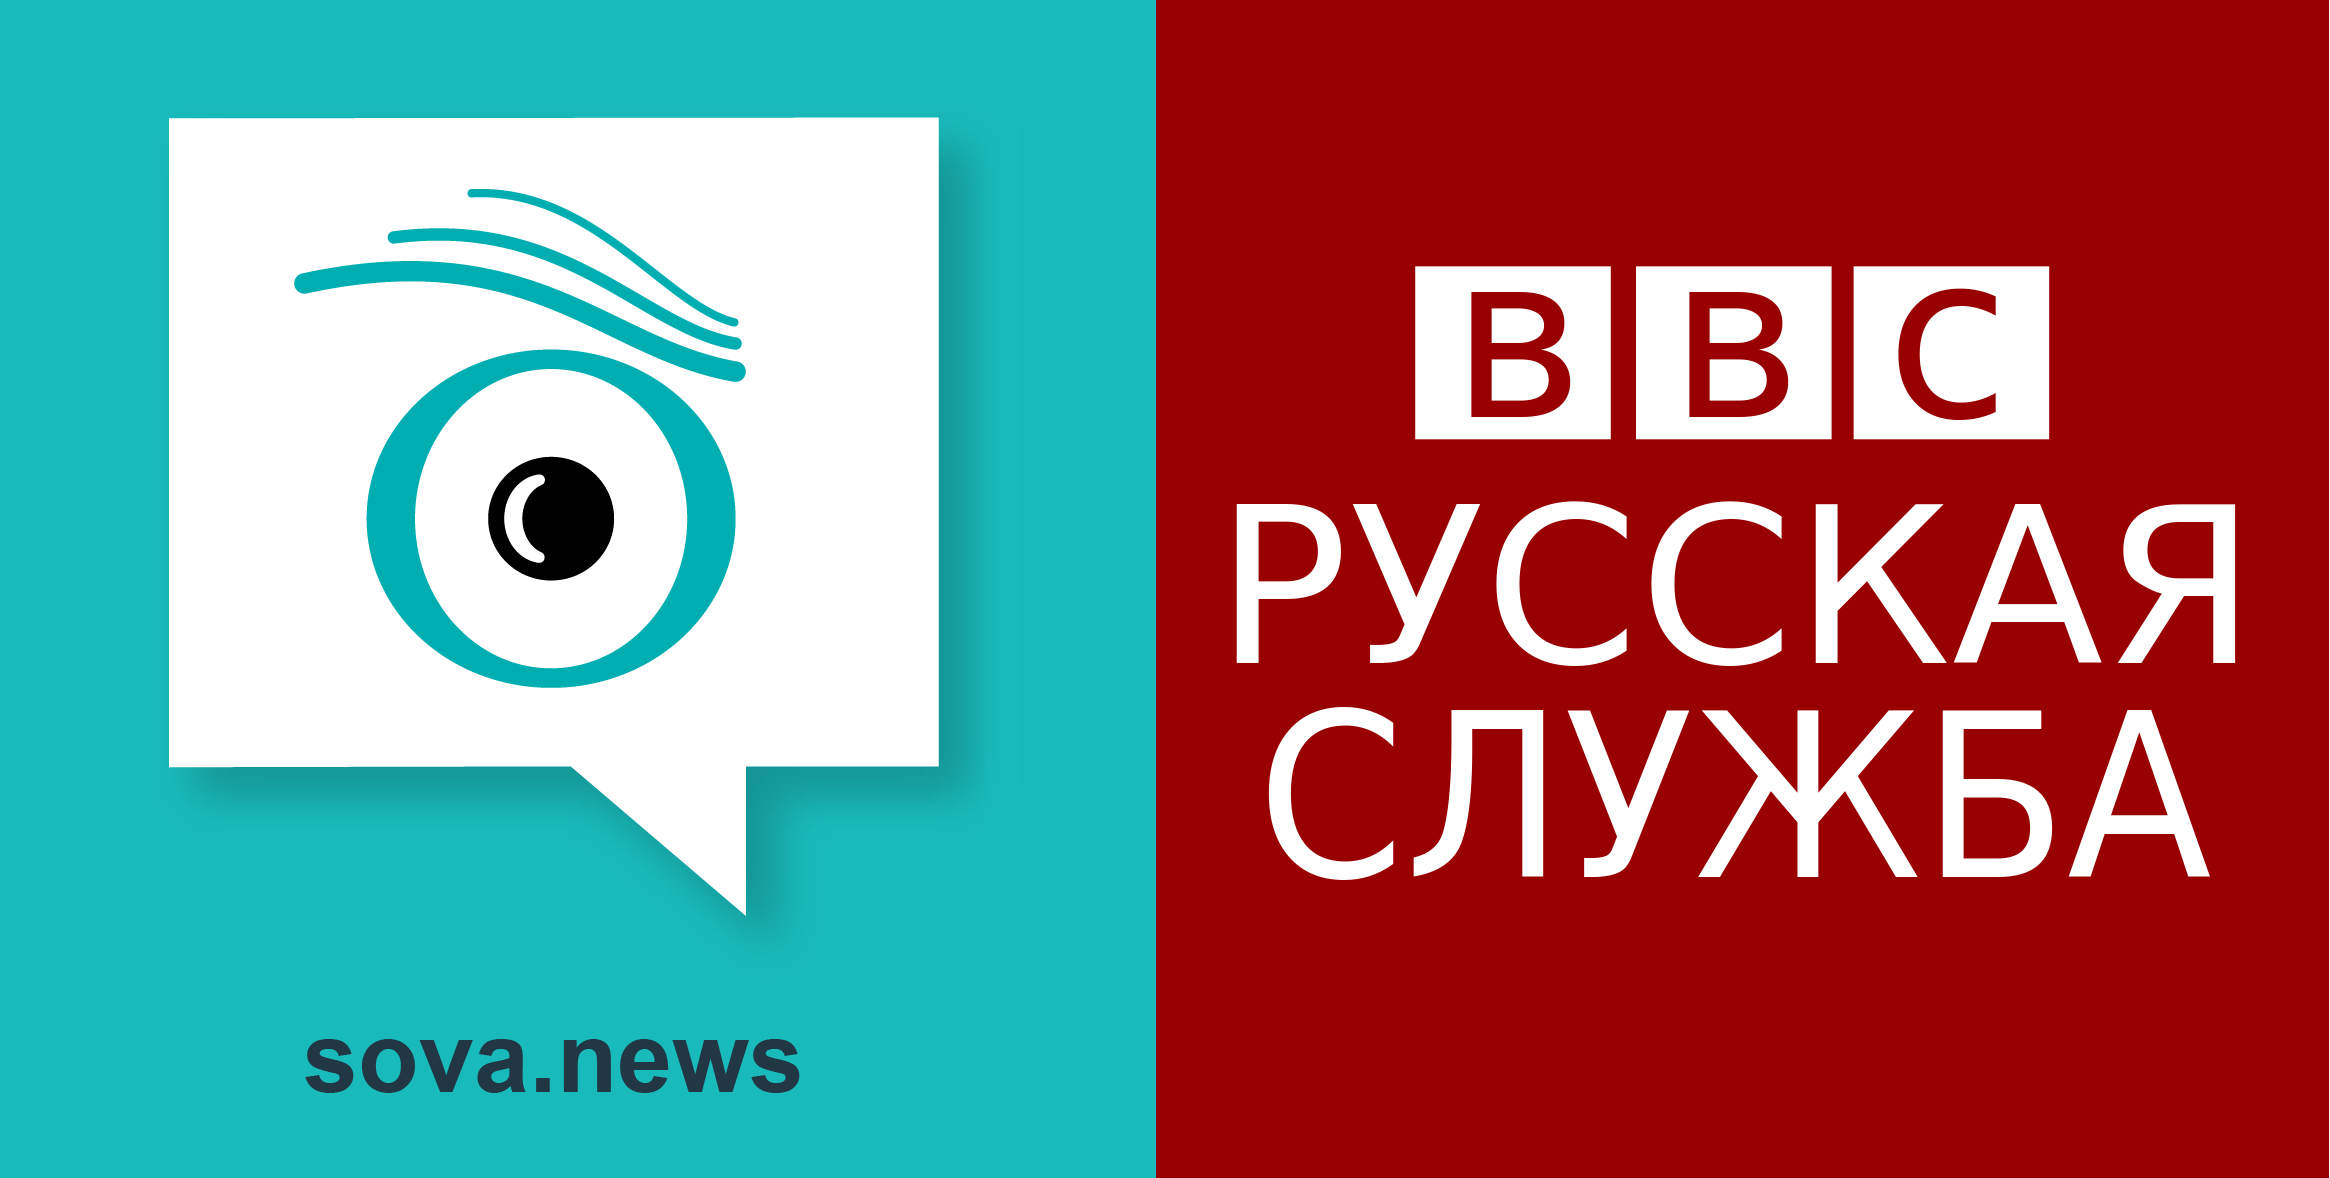 SAVO BBC Russia новости BBC News, Sova.News, русская служба Би-би-си, СМИ